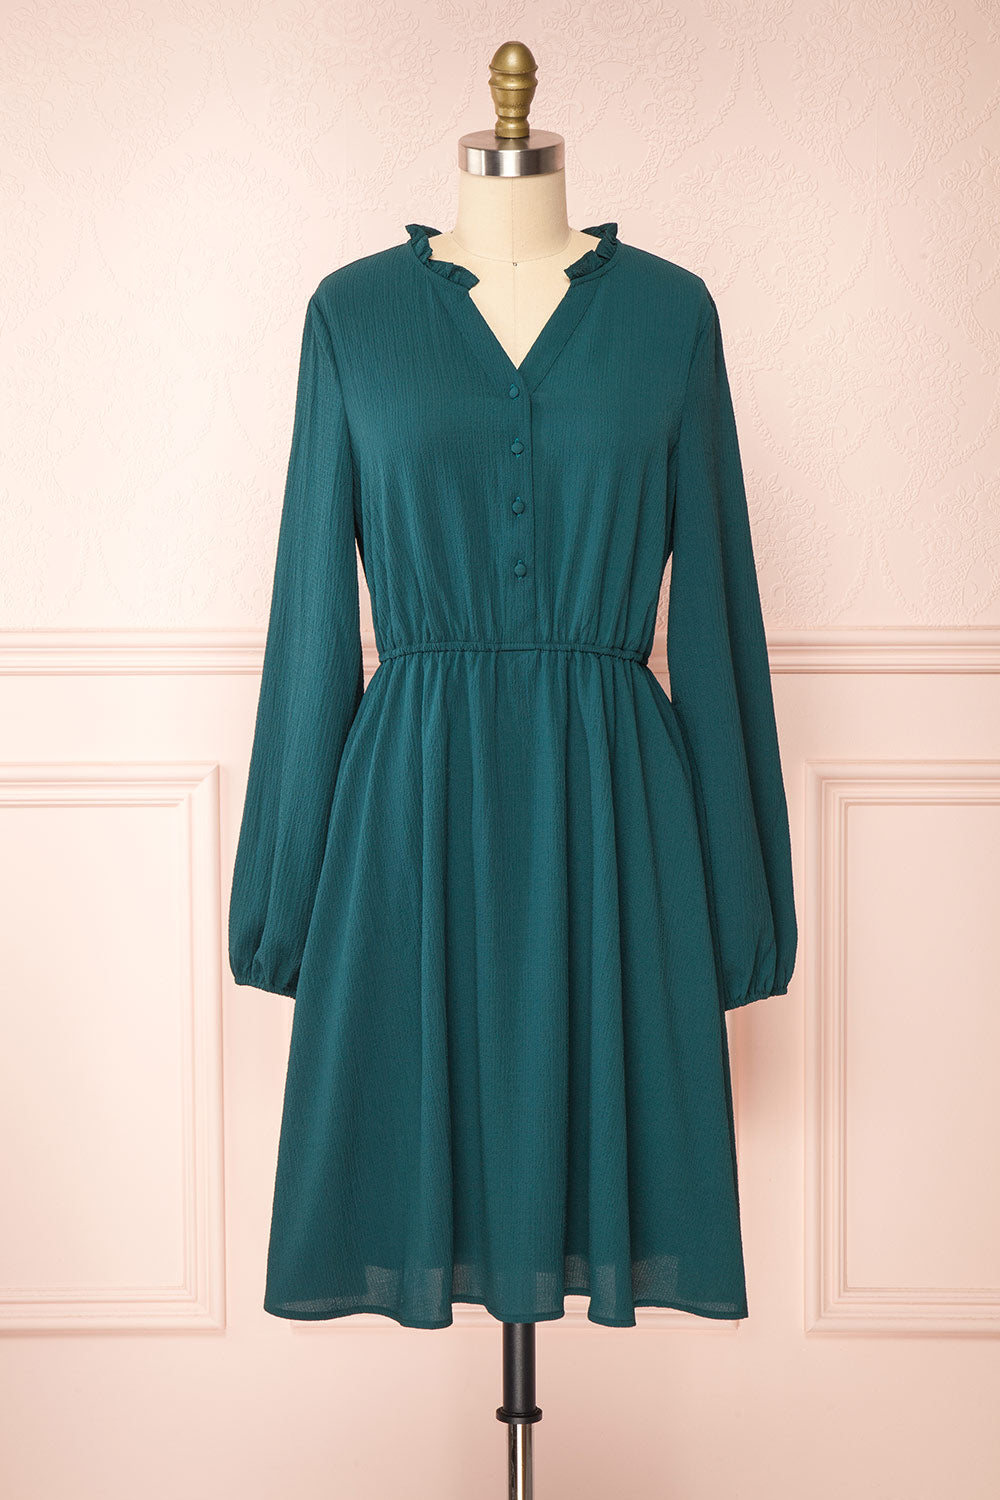 Tenzi Green Long Sleeve Short Dress w/ Buttons | Boutique 1861 front view